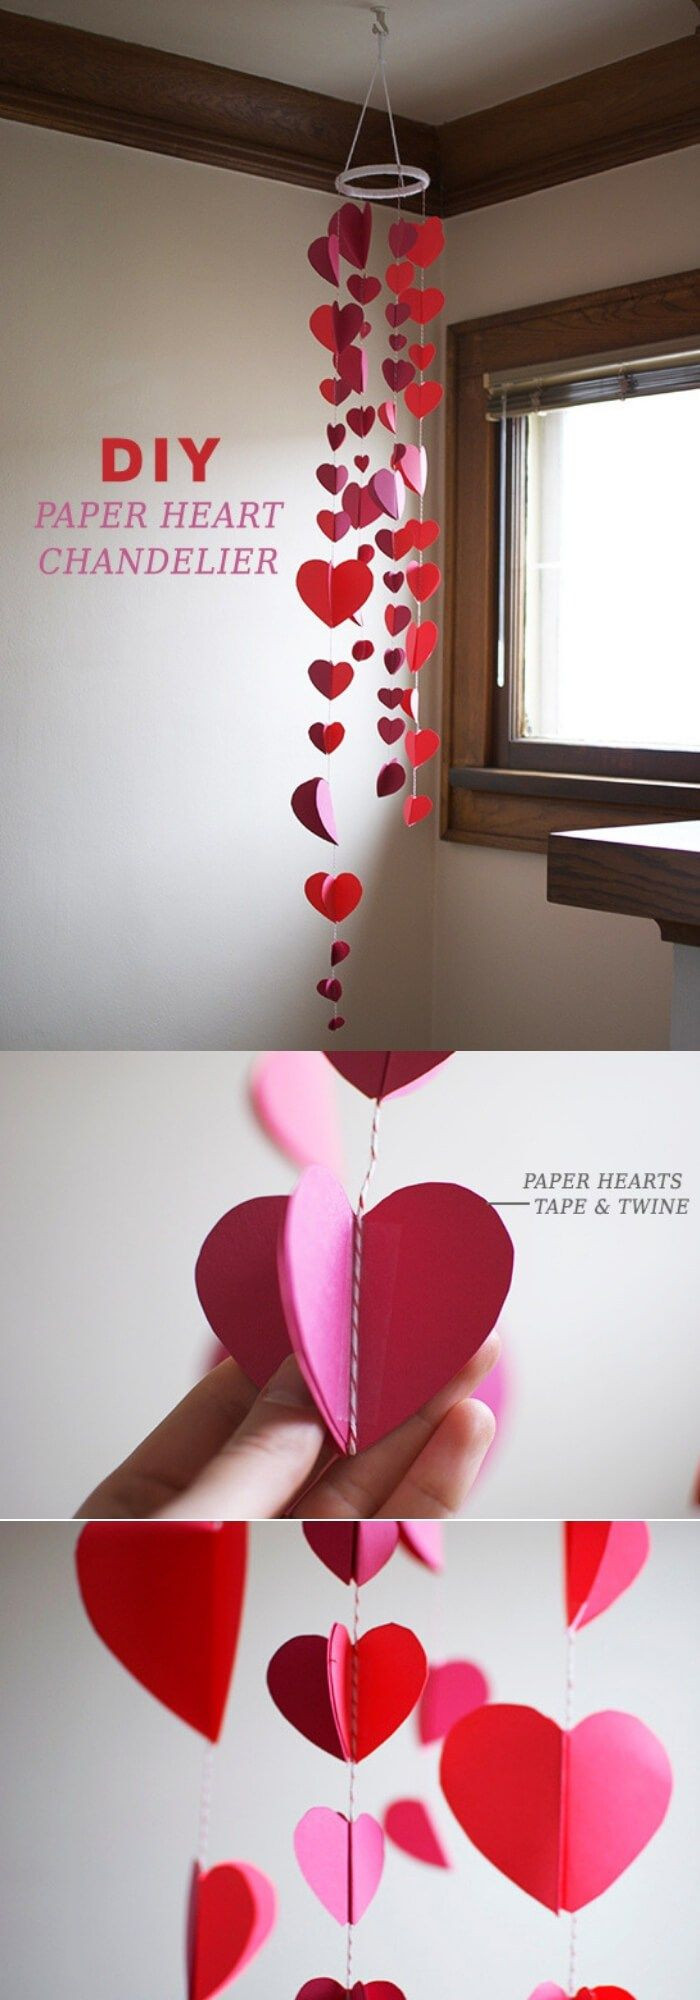 Last Minute Birthday Gift Ideas For Boyfriend
 10 Last Minute Valentine s Day Ideas To Warm the Heart